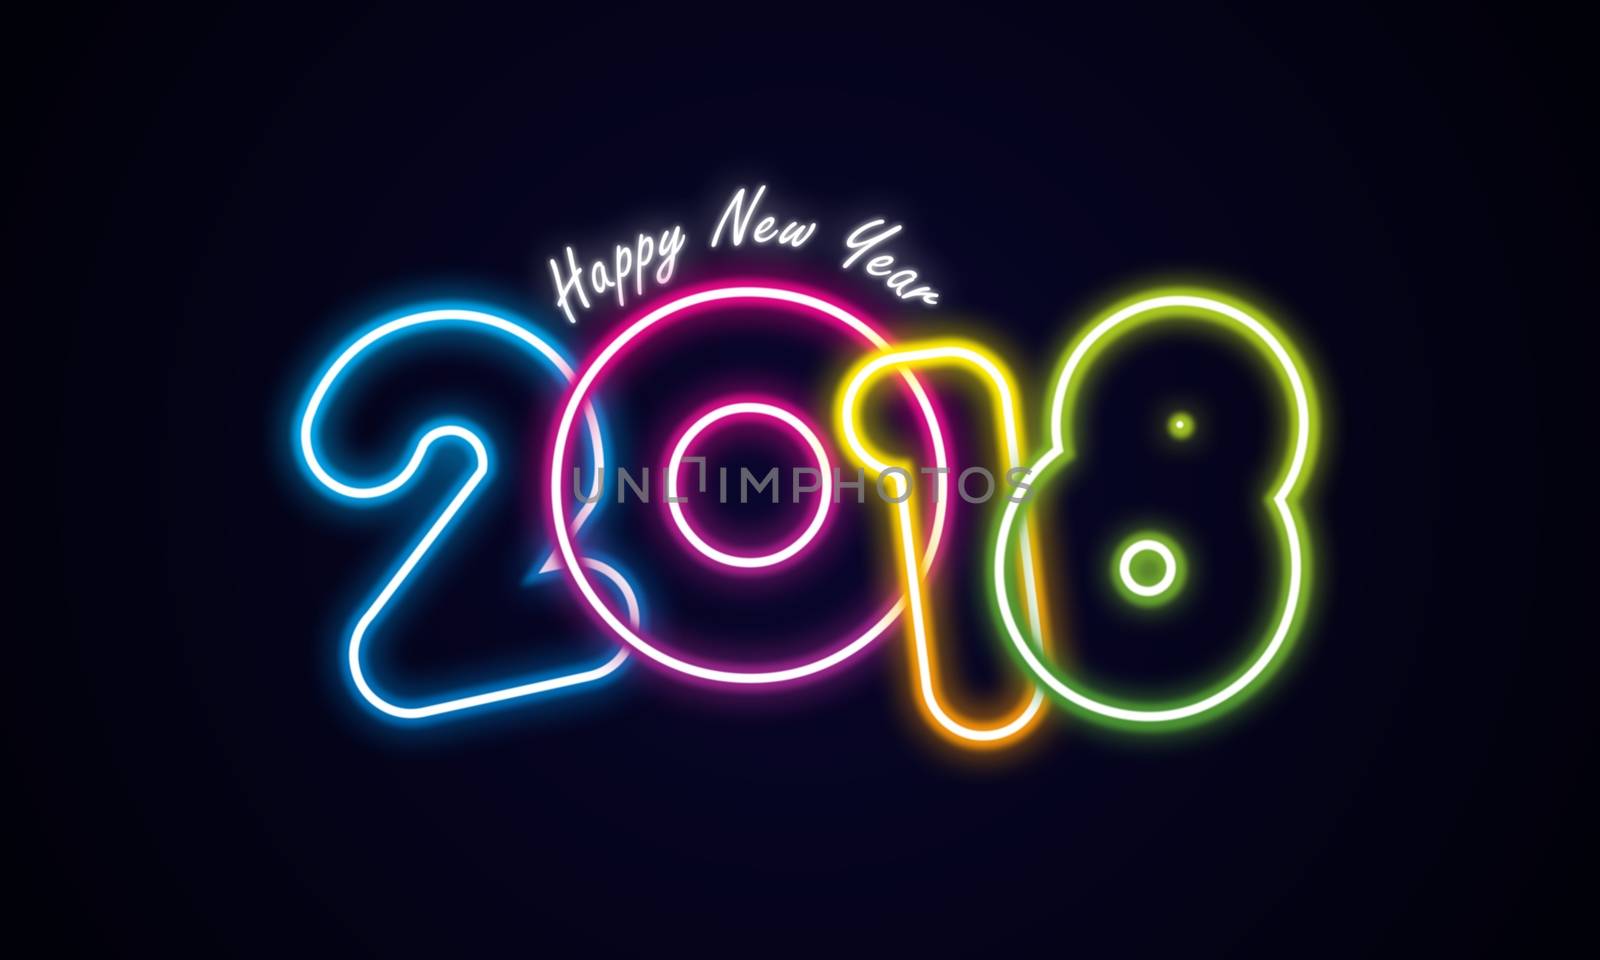 Happy new year 2018 celebration greeting card design